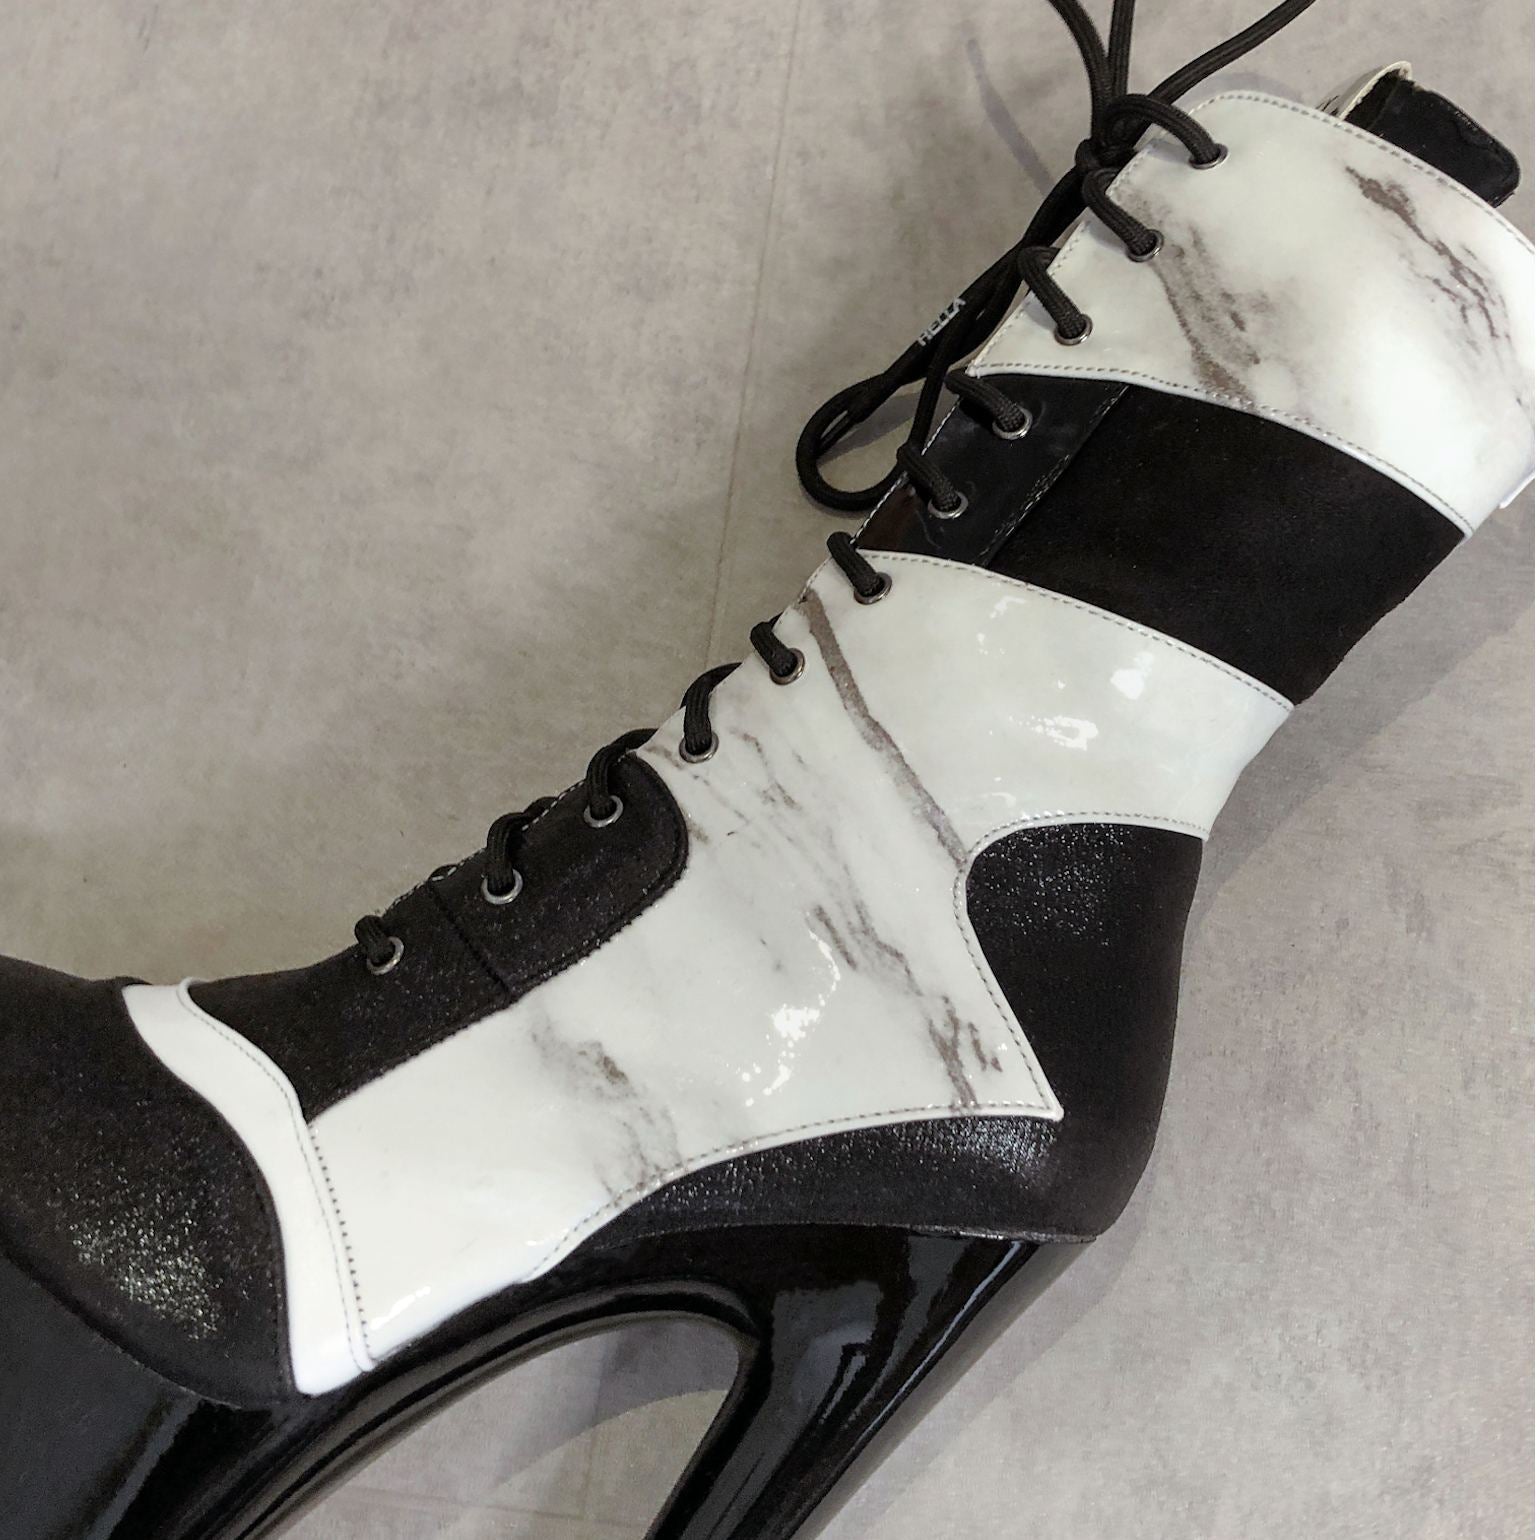 Empire Kicks Sneaker White Marble - 7 INCH, stripper shoe, stripper heel, pole heel, not a pleaser, platform, dancer, pole dance, floor work